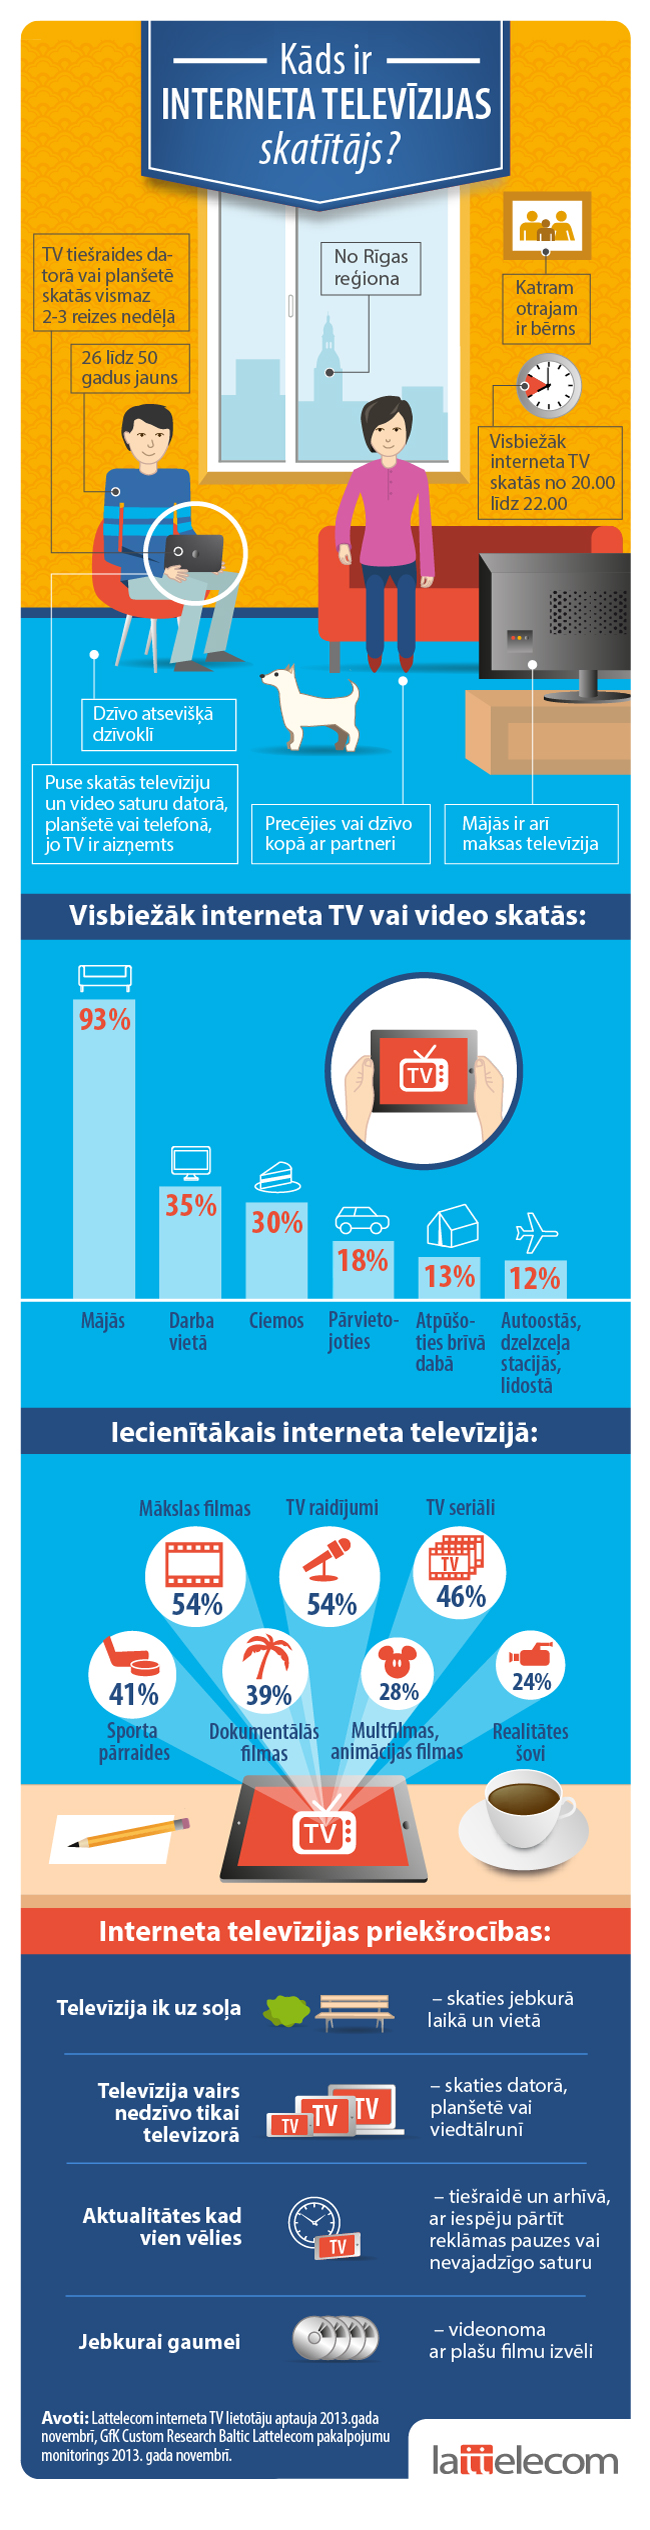 Infografika kads ir interneta TV skatitajs LV